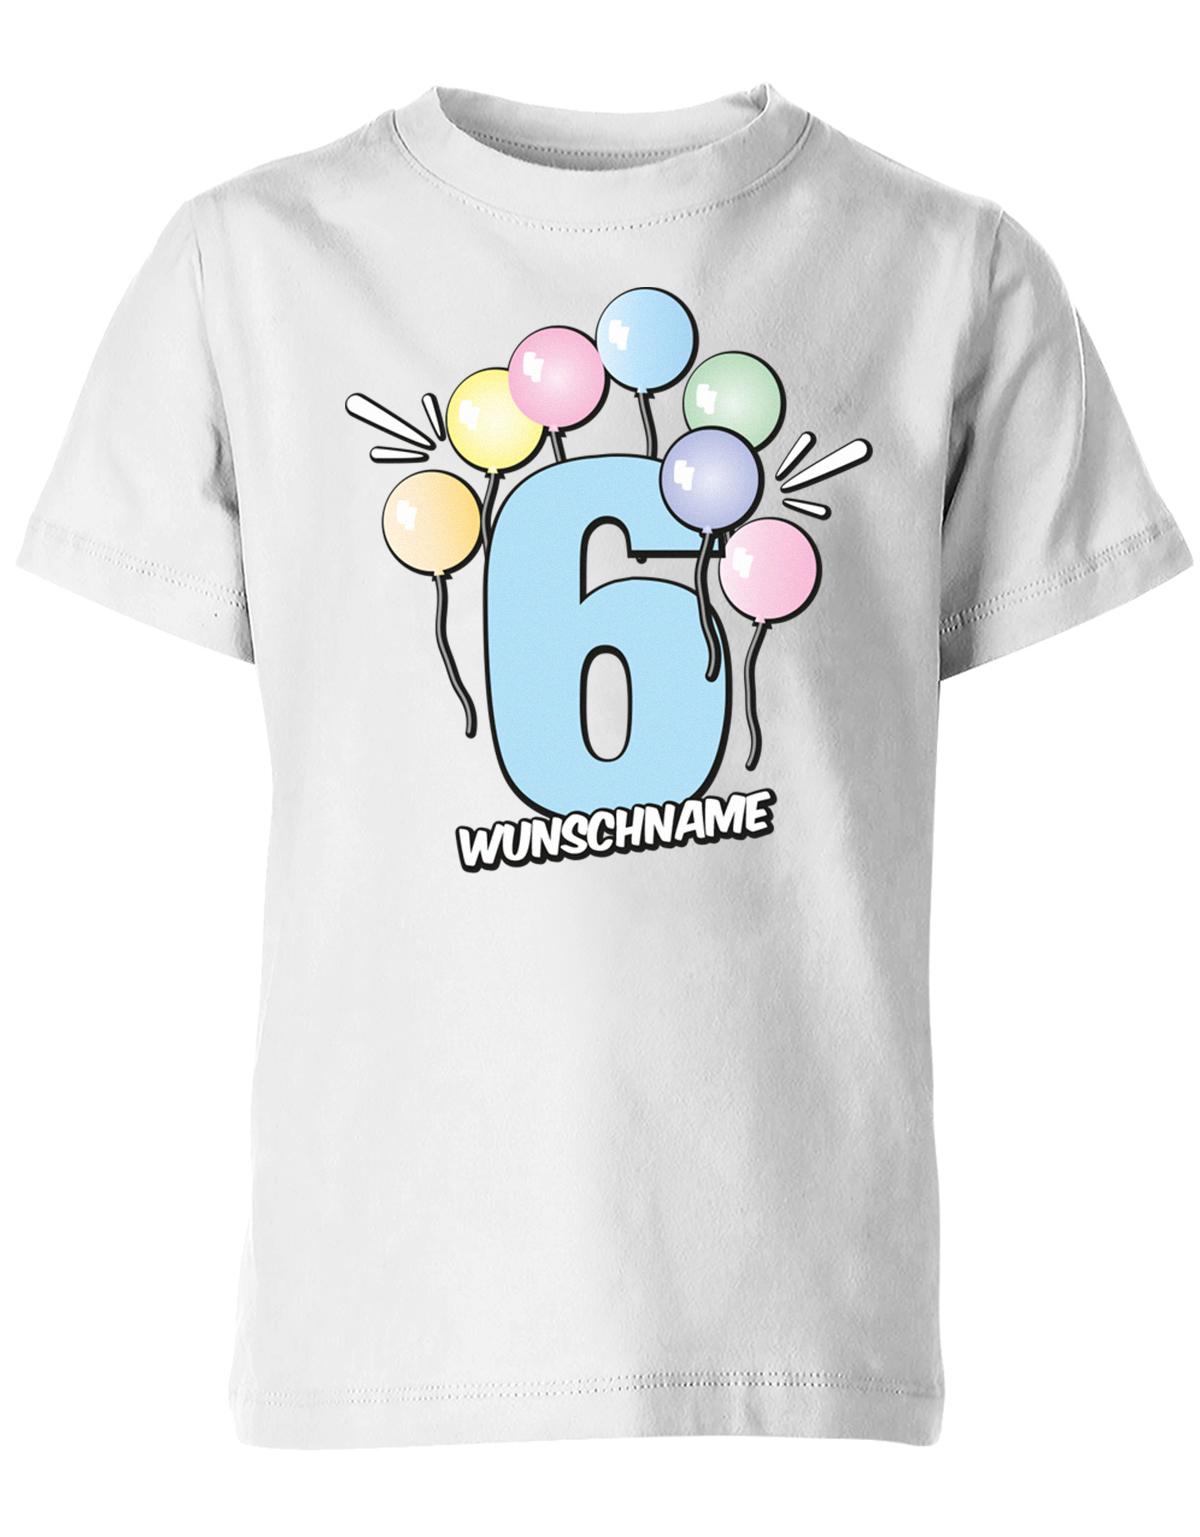 Luftballons-pastell-6-geburtstag-wunschname-kinder-shirt-weiss